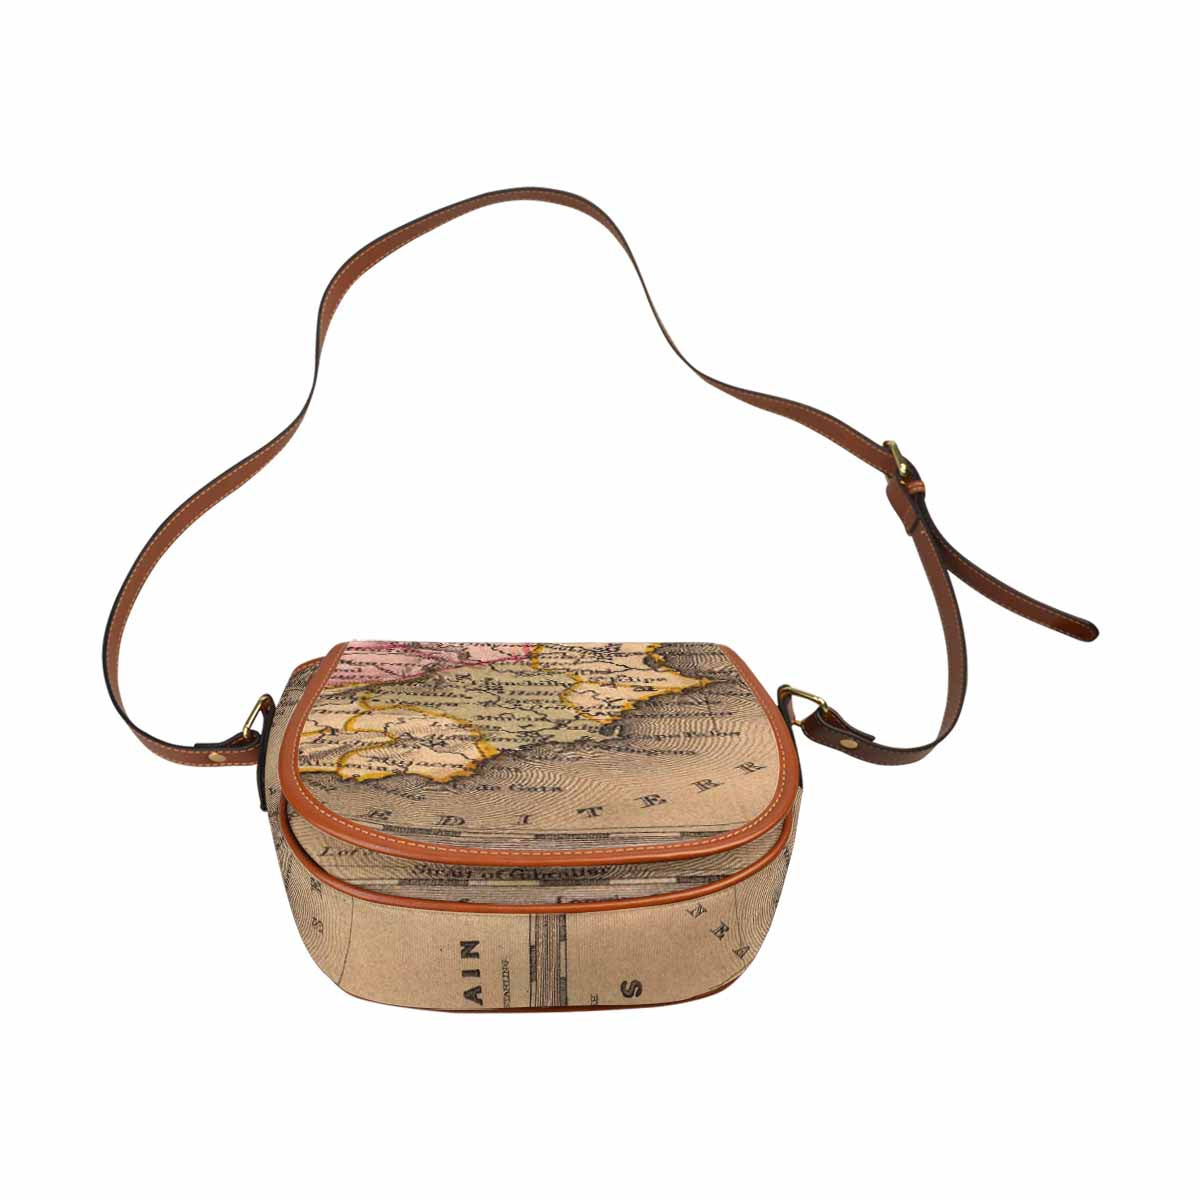 Antique Map design Handbag, saddle bag, Design 16